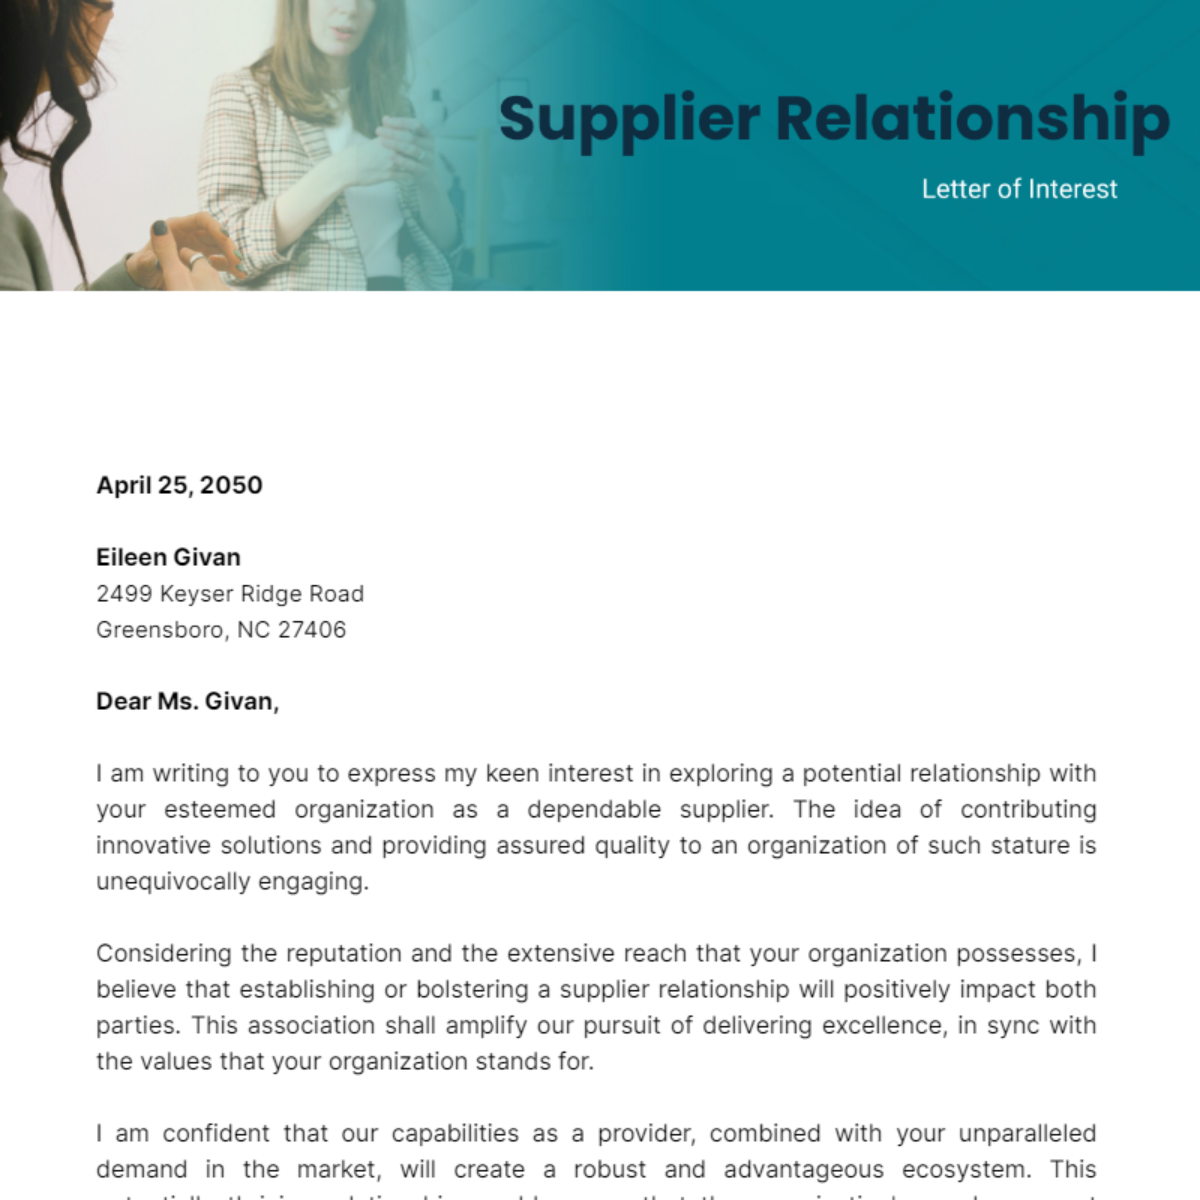 Supplier Relationship Letter of Interest Template